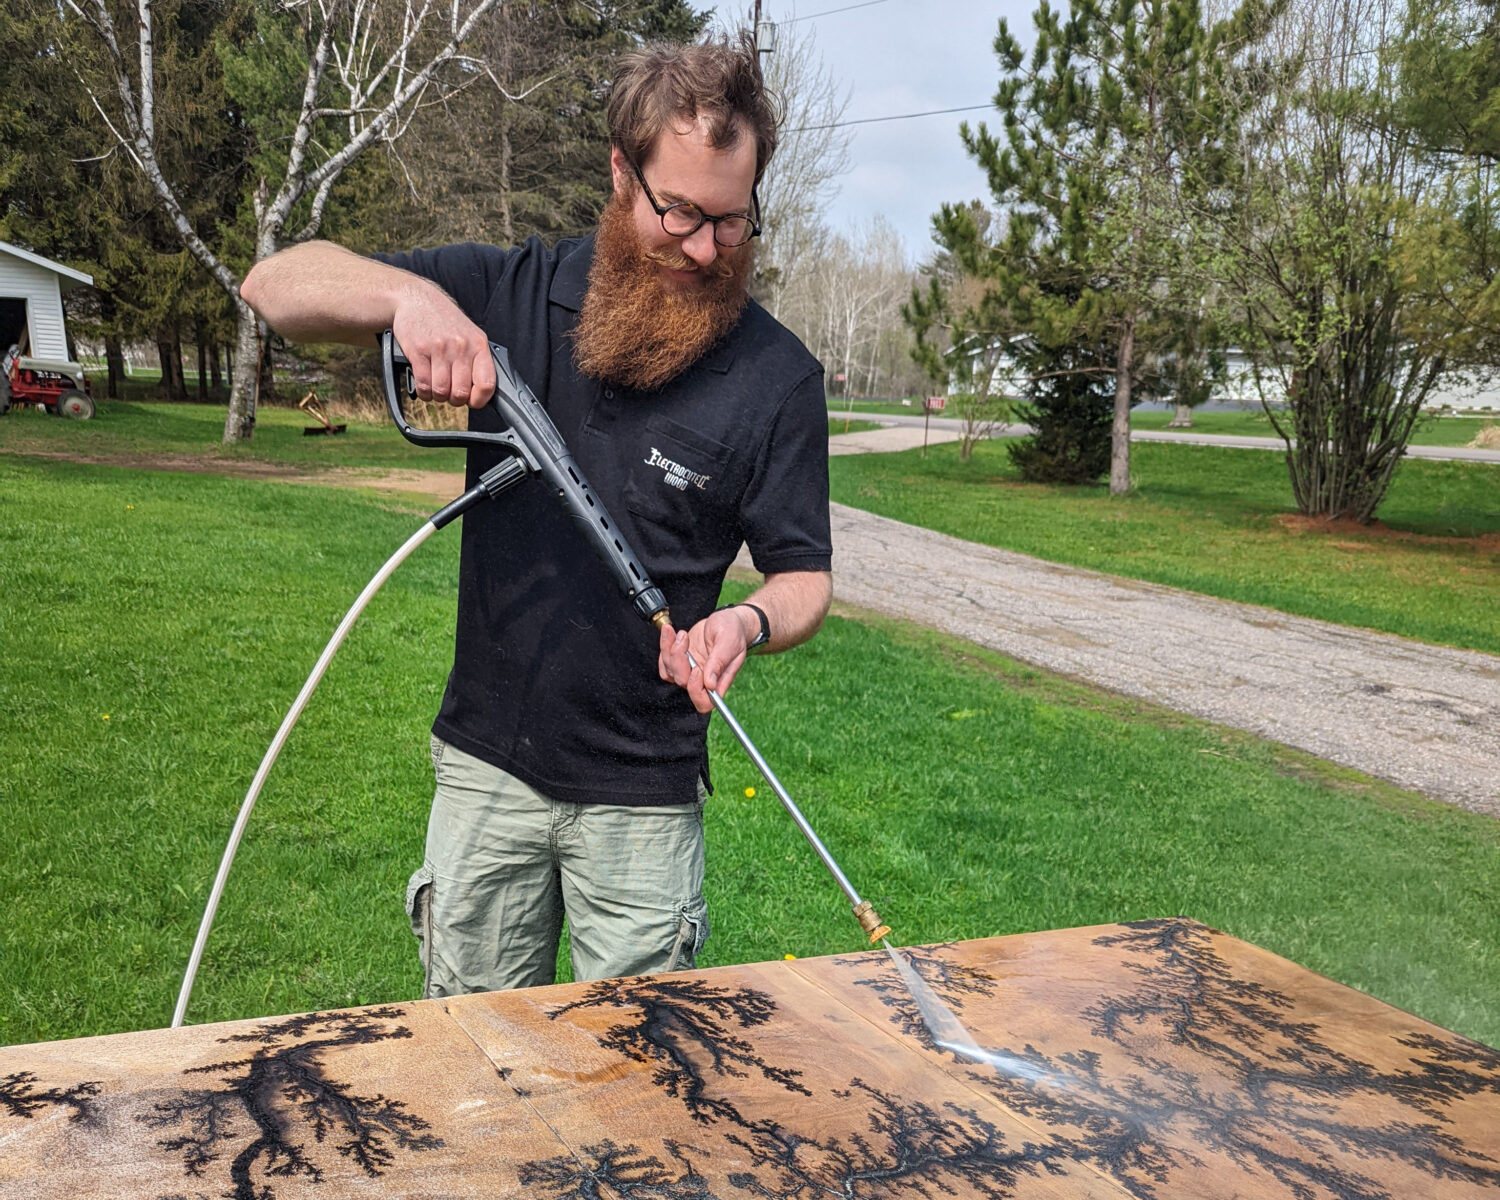 How to Make Woodburning Art - News